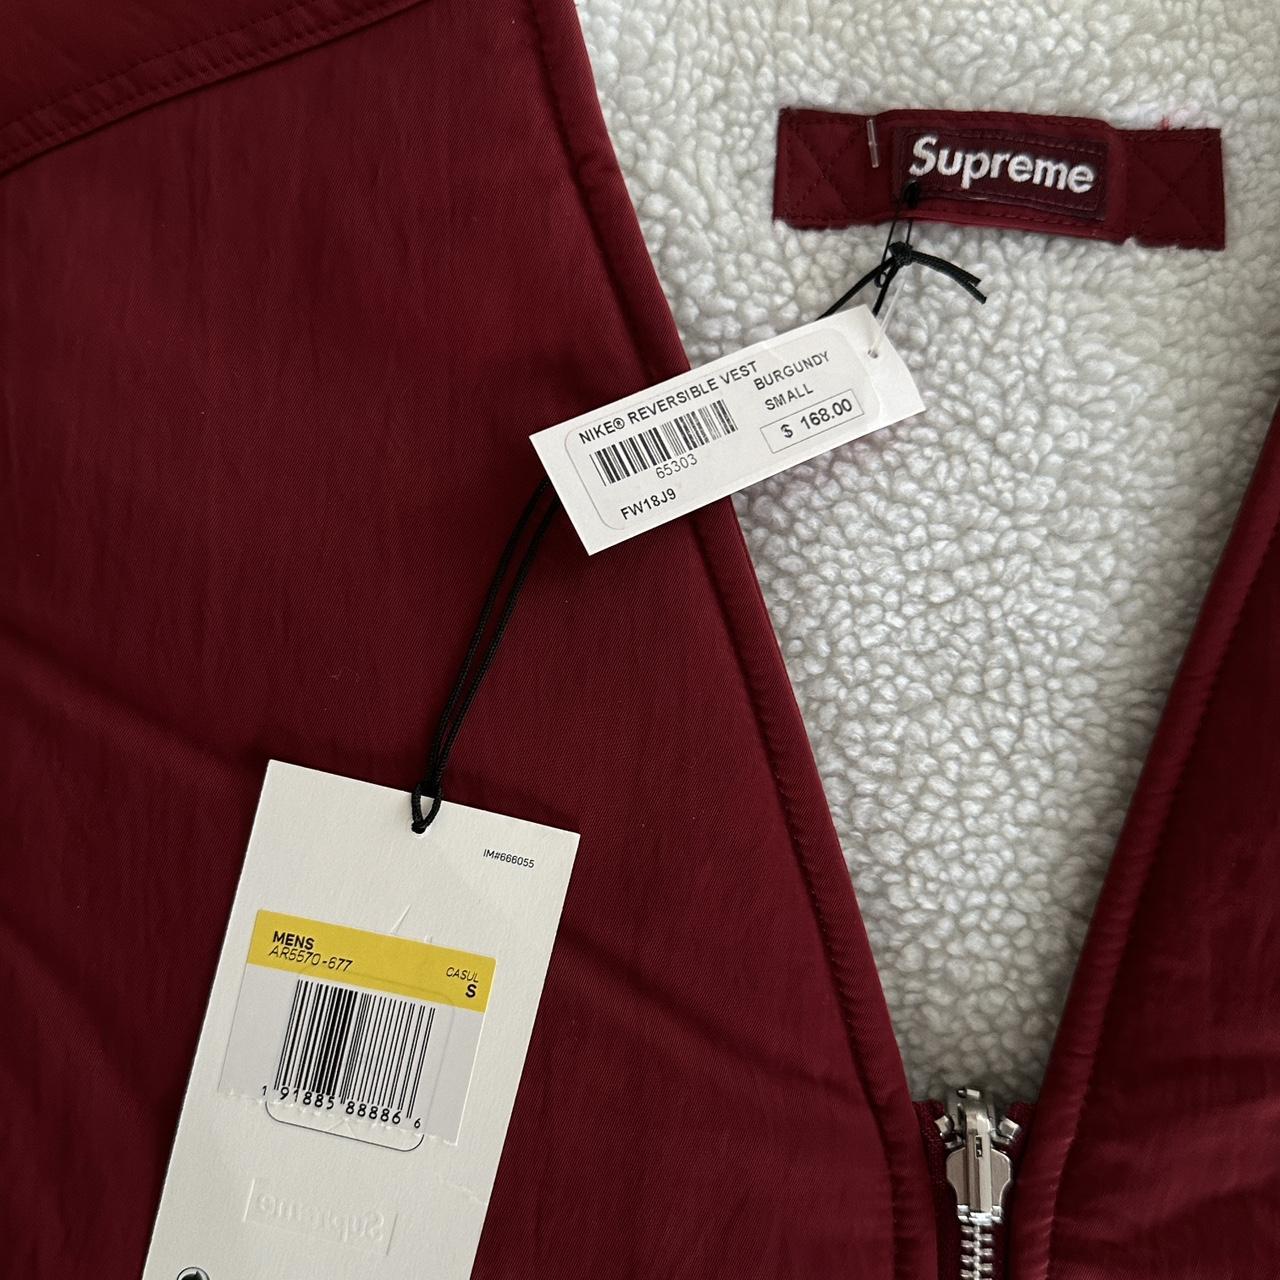 Supreme Nike Reversible Nylon Sherpa Vest From... - Depop